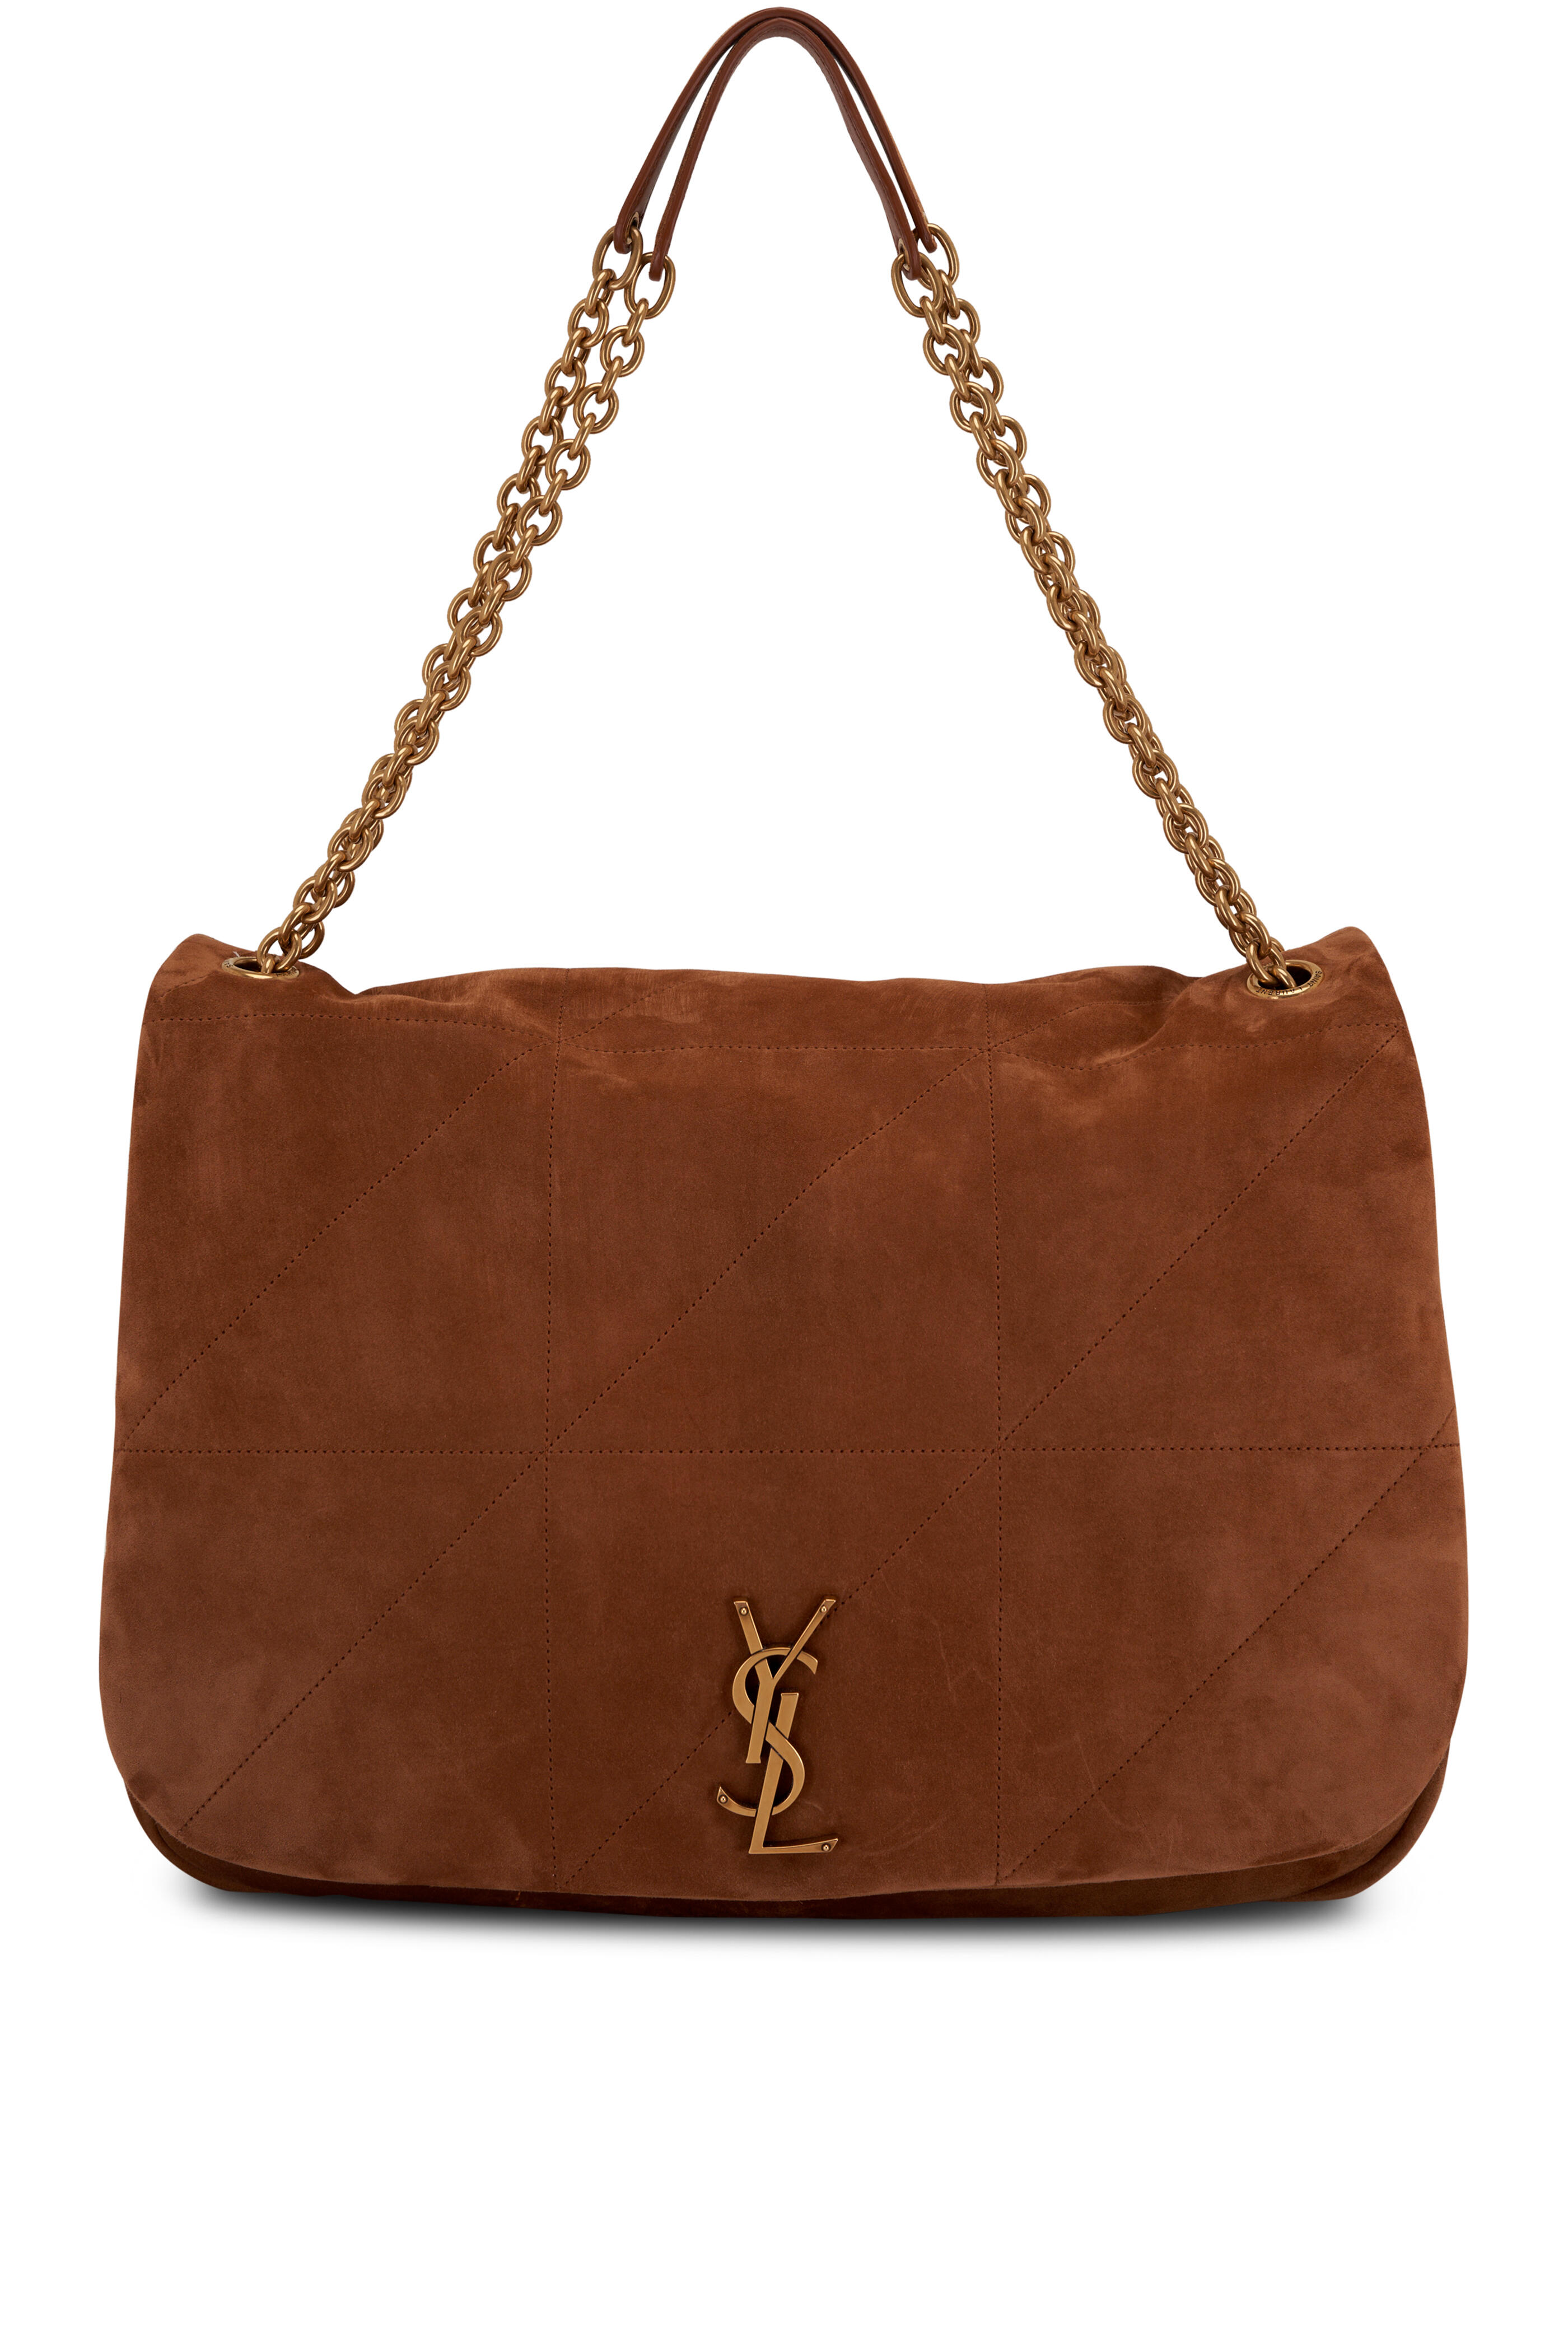 YVES SAINT LAURENT YSL Black / Brown Leather Tote bag One Shoulder